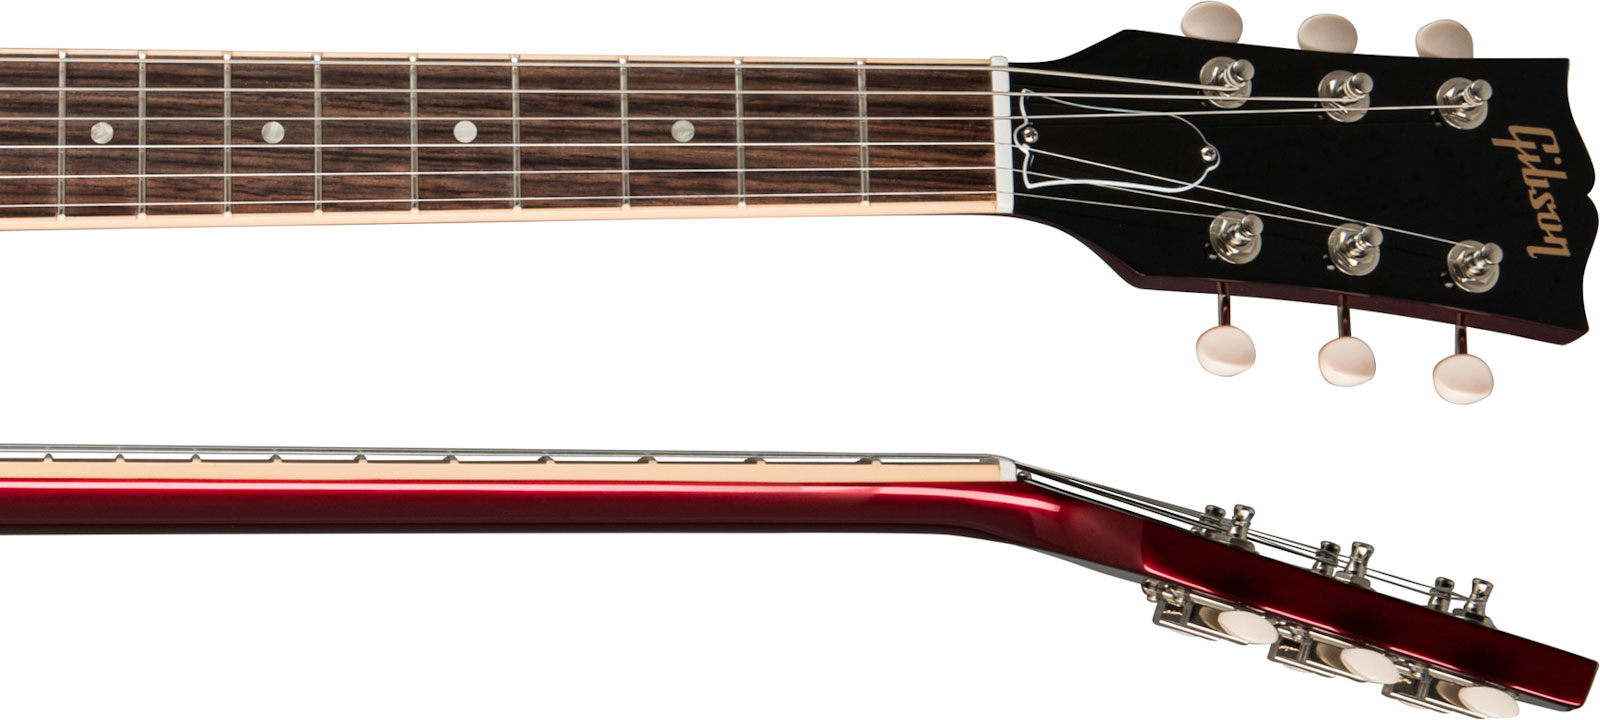 Gibson Sp Special Original 2p90 Ht Rw - Vintage Sparkling Burgundy - Retro rock electric guitar - Variation 3